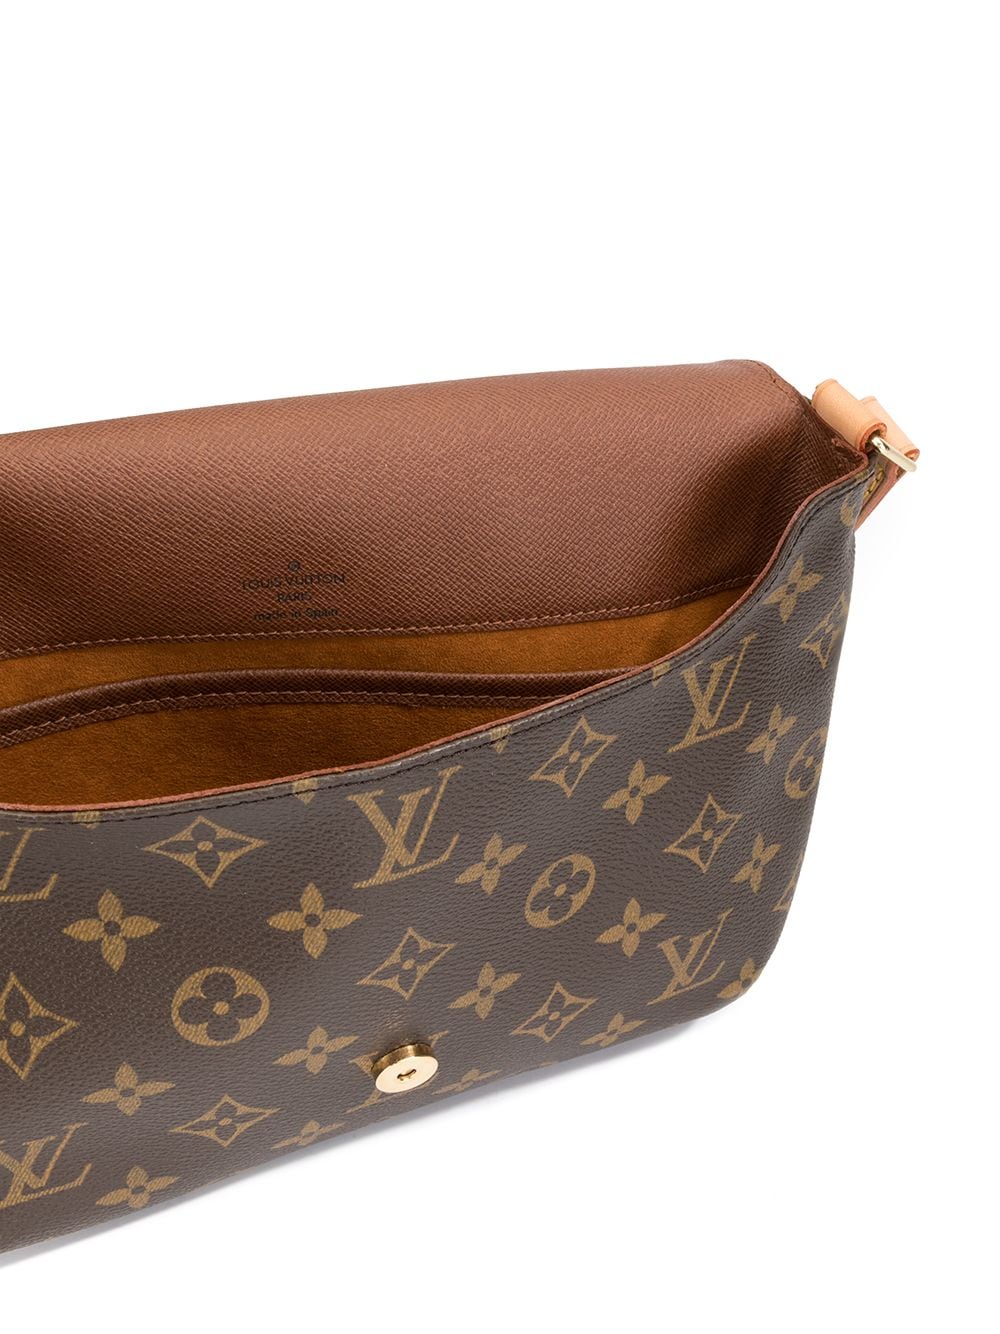 authentic Louis Vuitton musette tango bag - clothing & accessories